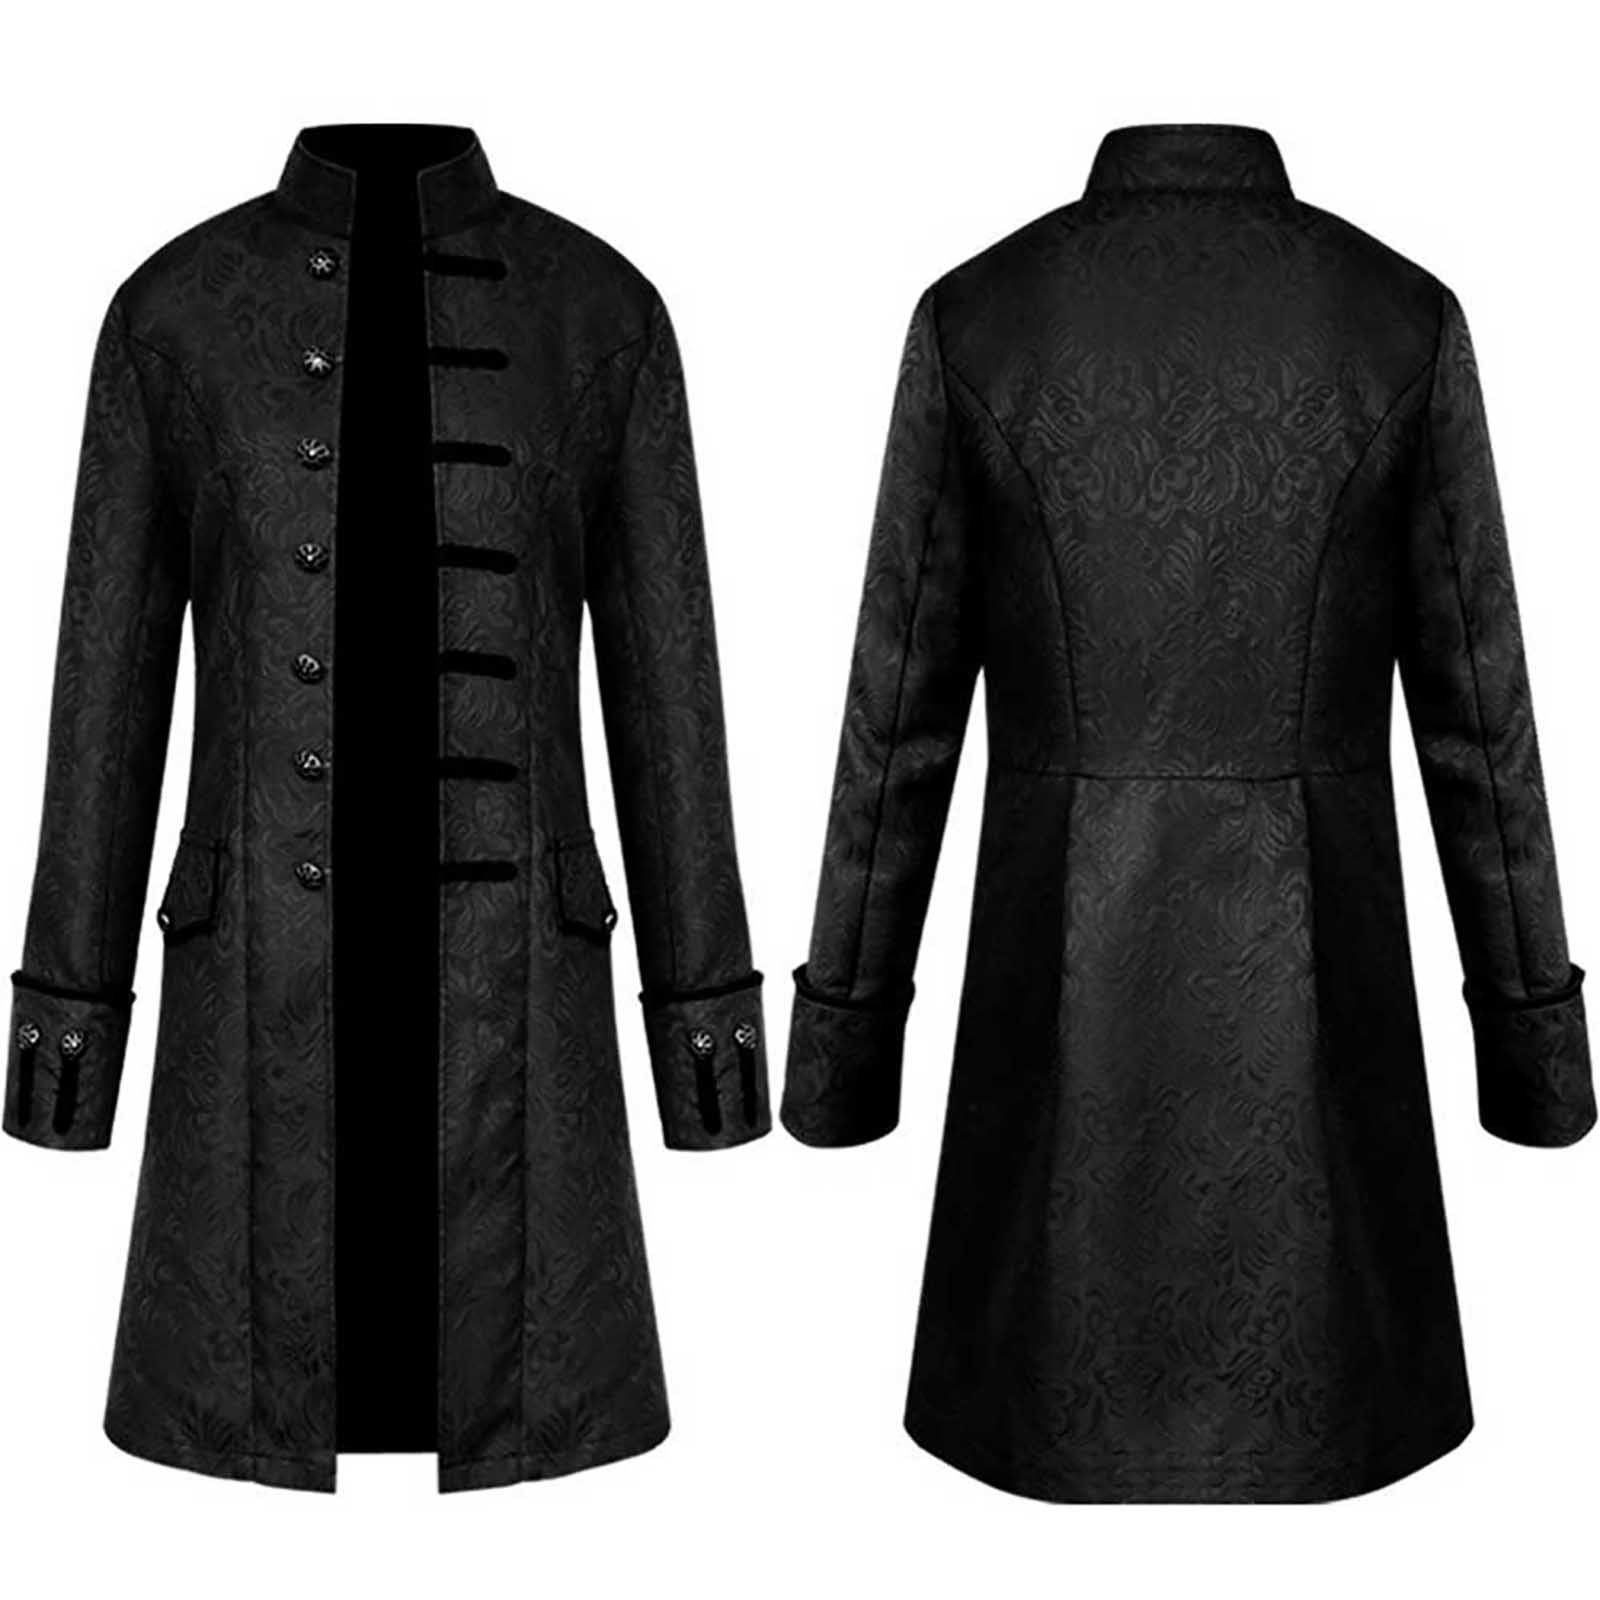 Mens Coat long Jacket Gothic Steampunk с капюшоном